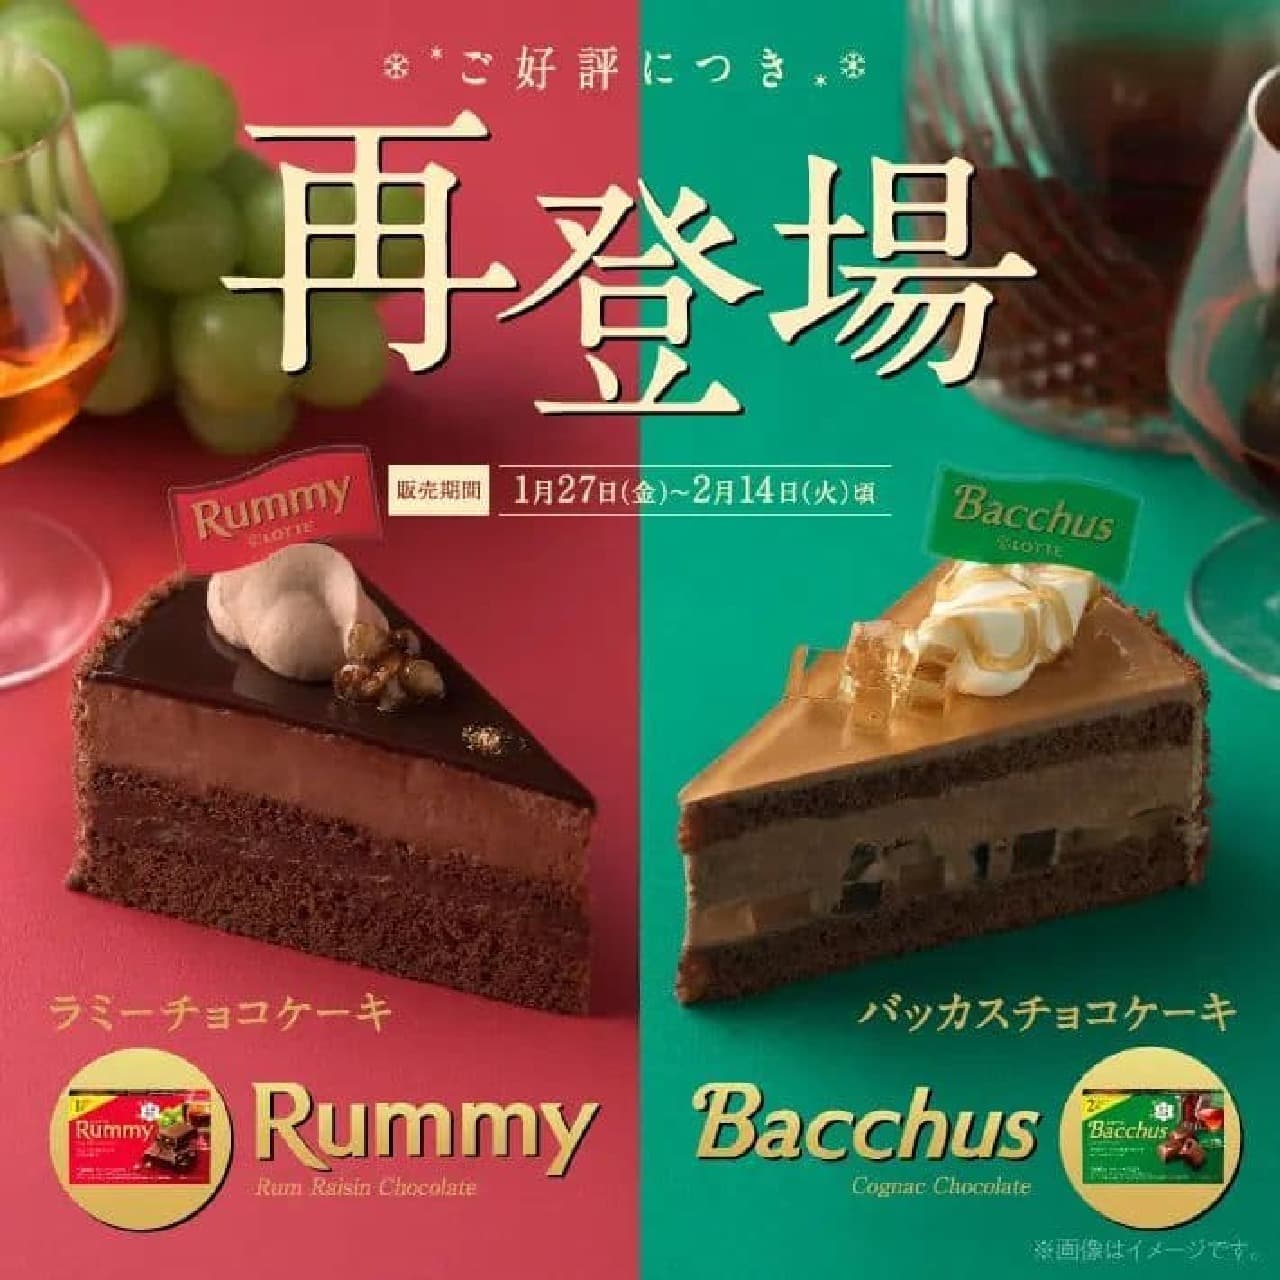 Ginza Kozy Corner "Rummy Chocolate Cake" and "Bacchus Chocolate Cake